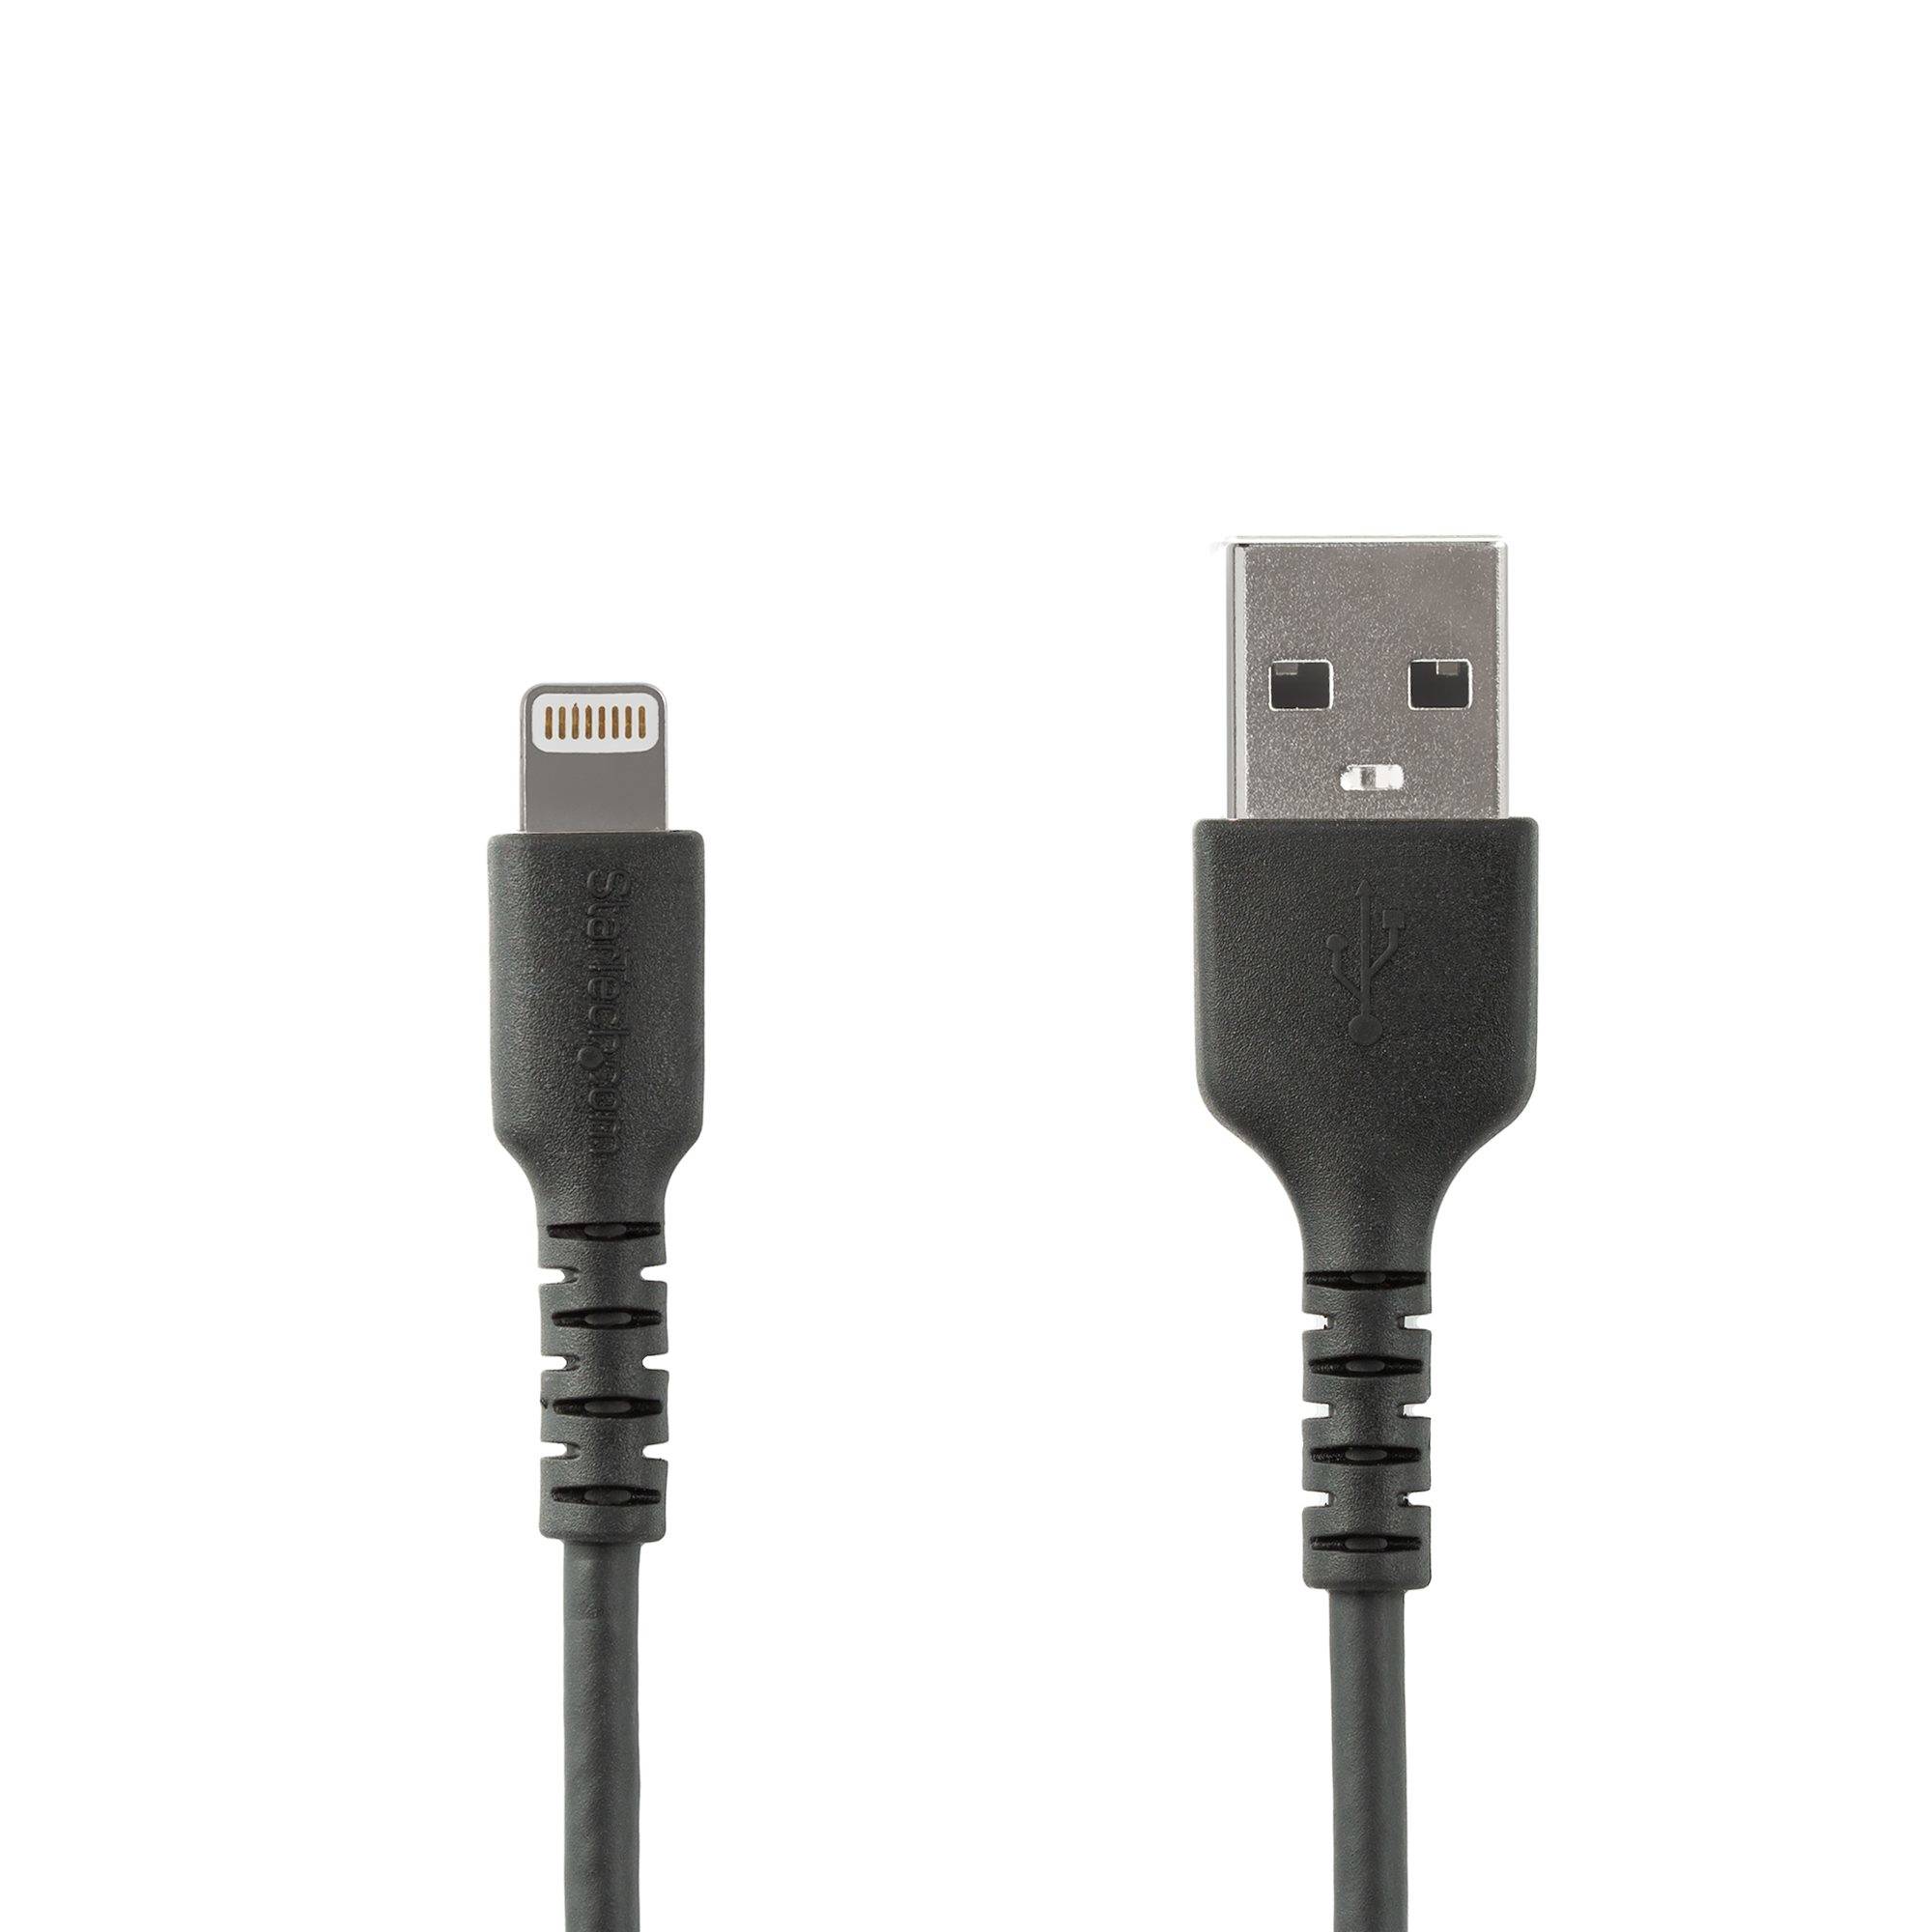 Rca Informatique - Image du produit : 2M USB TO LIGHTNING CABLE APPLE MFI CRTIFIED DUPONT KEVLAR